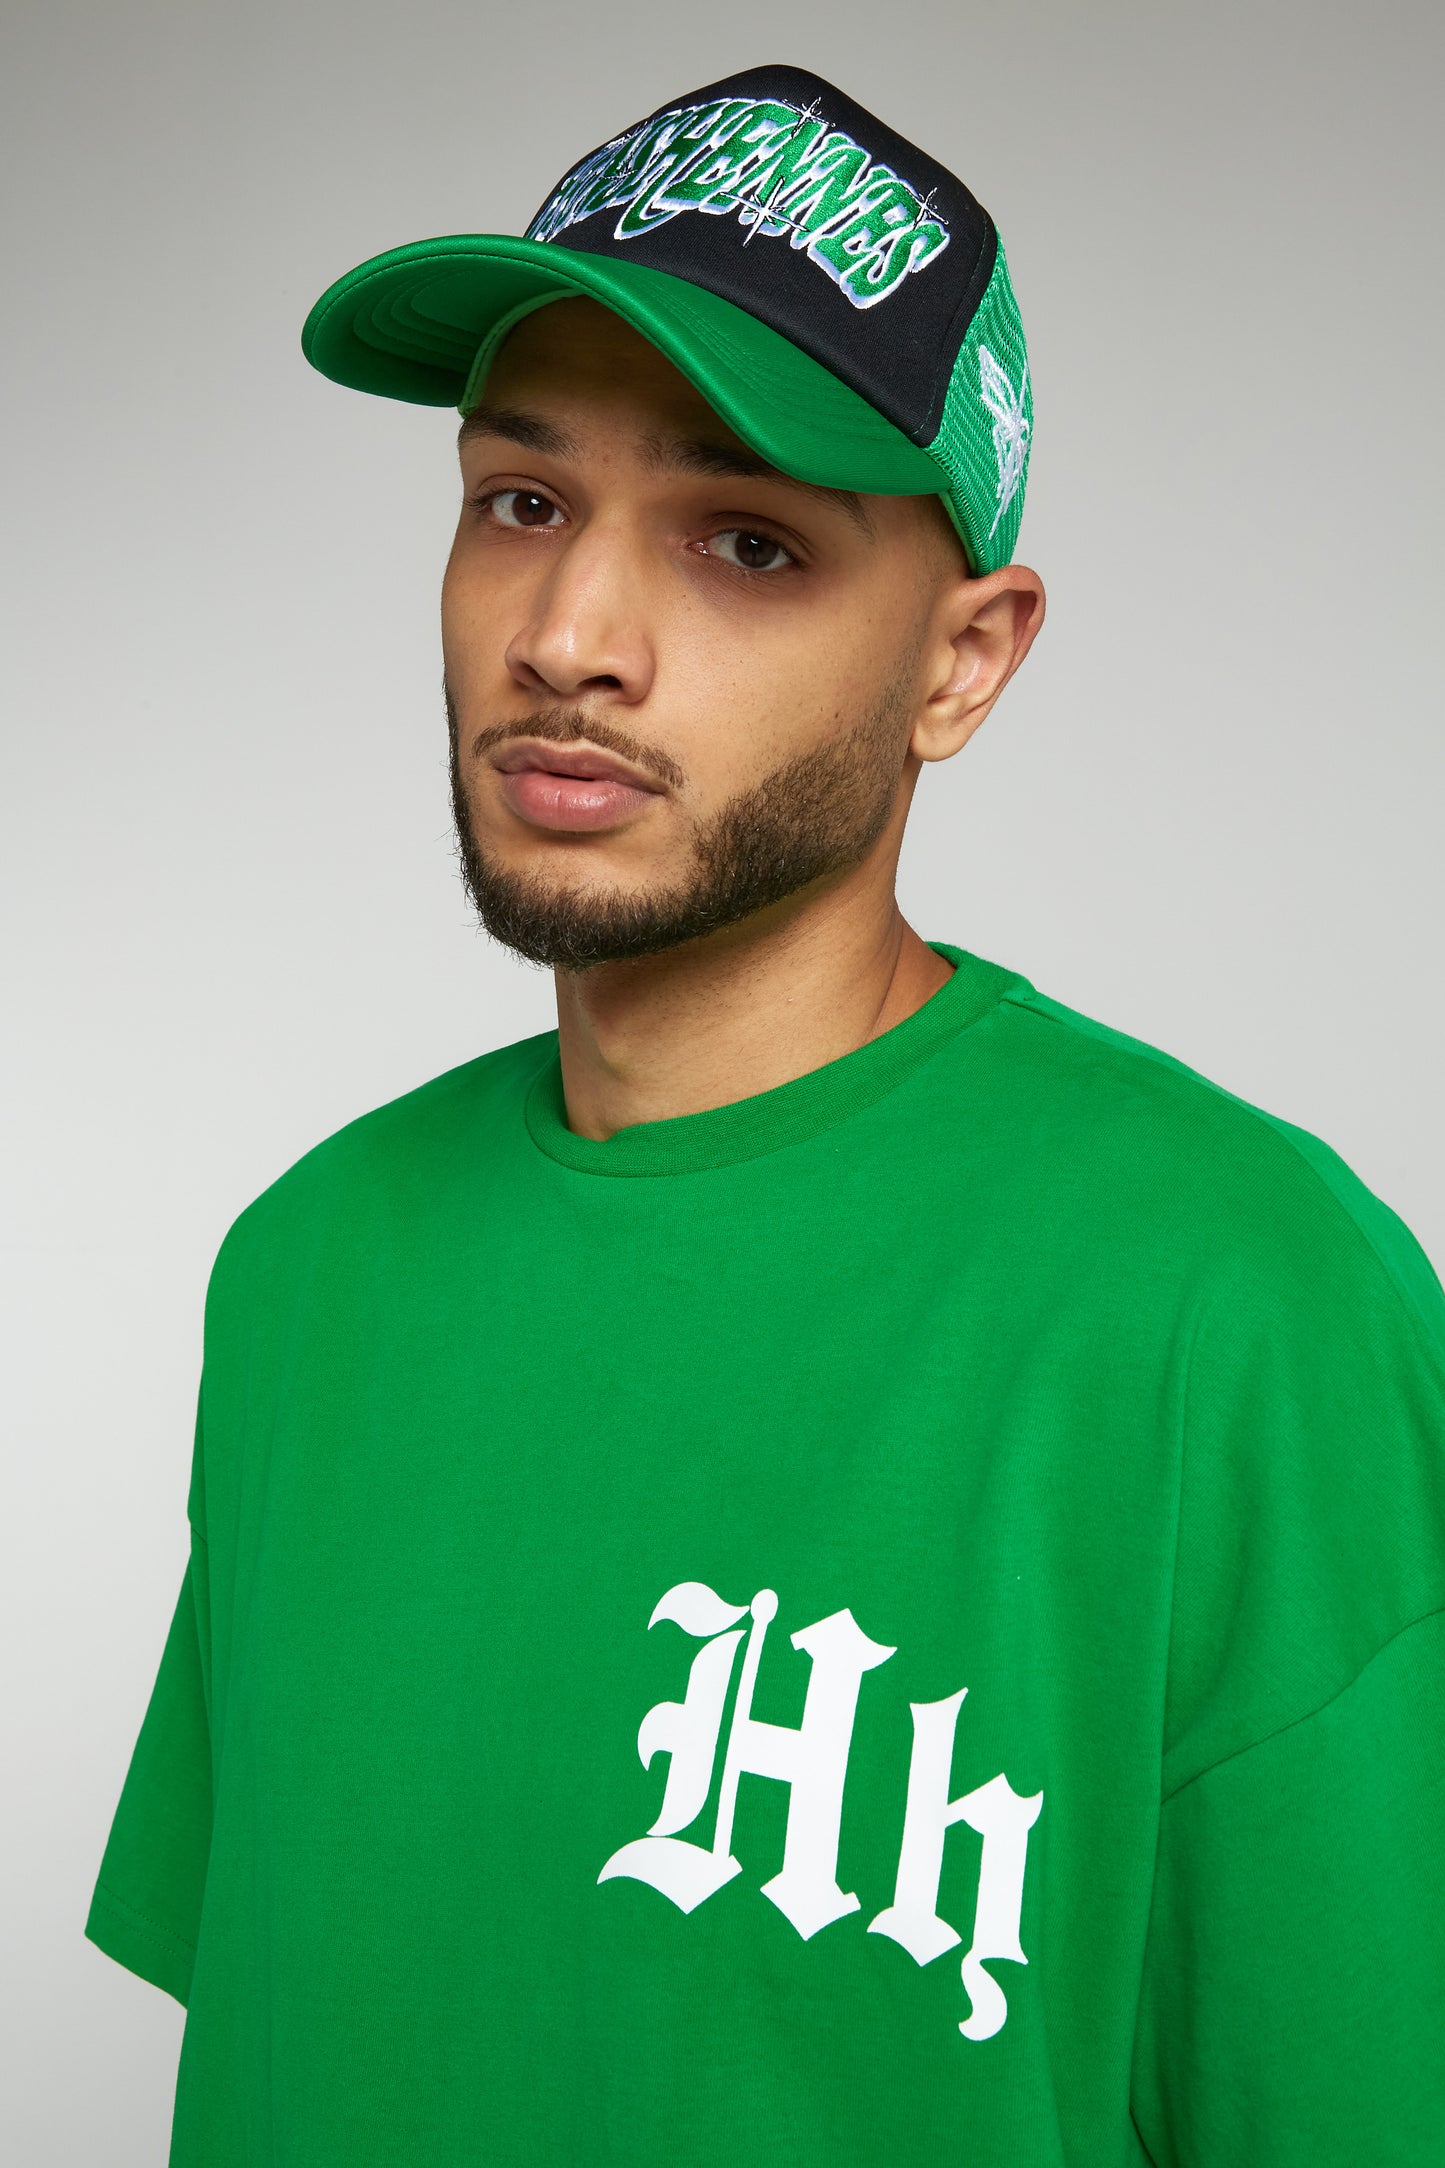 S1 Bold Green T-shirt 